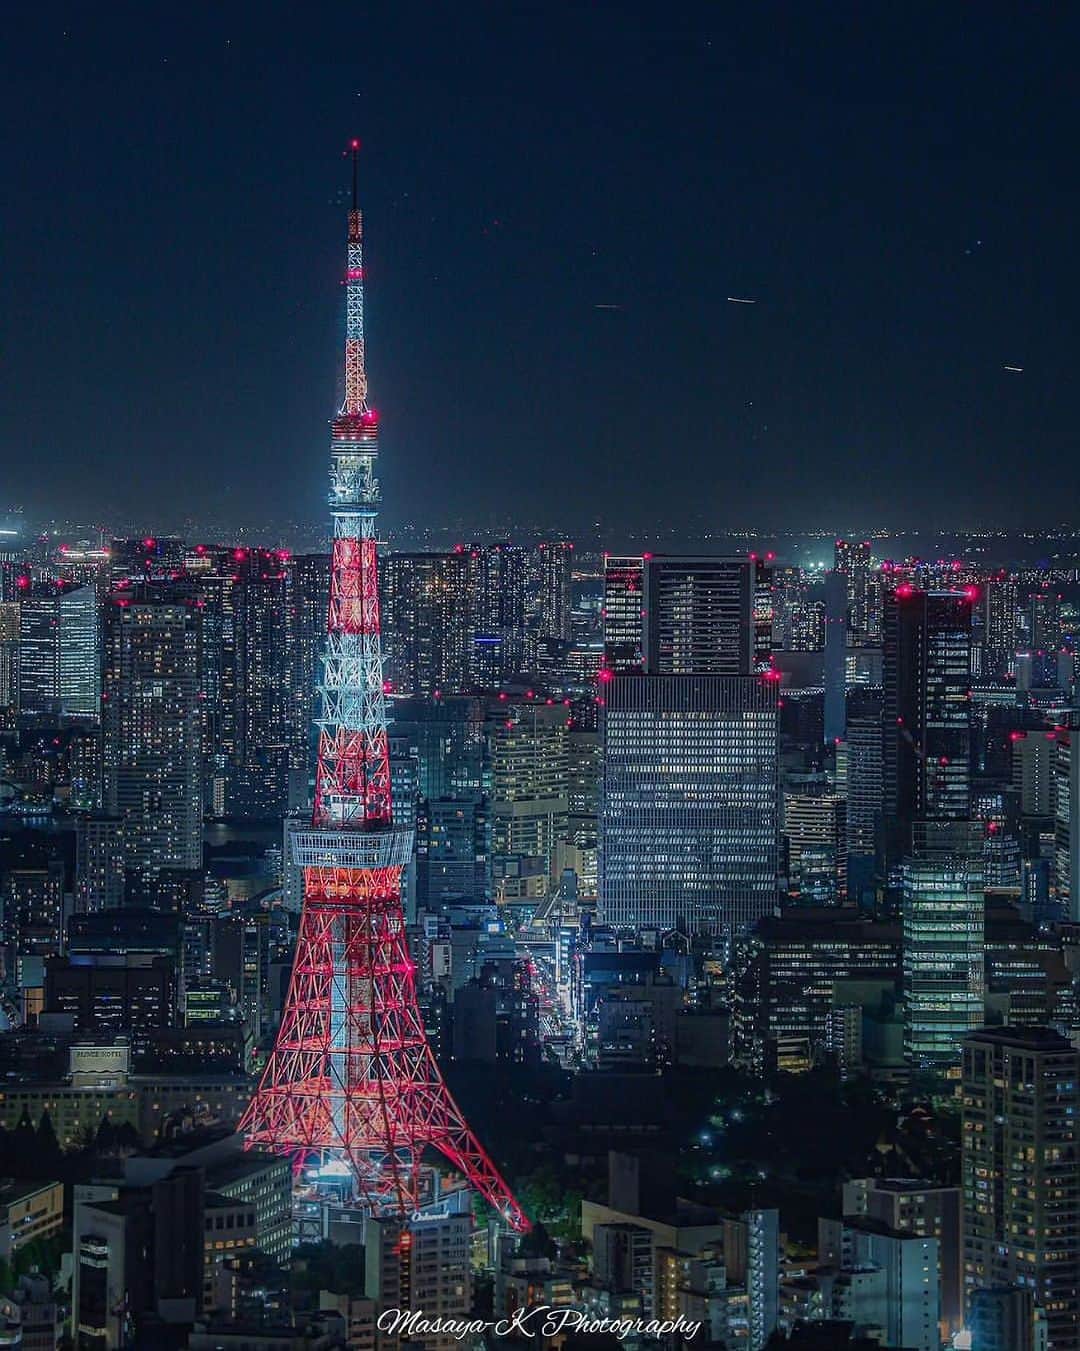 Tokyo City View 六本木ヒルズ展望台のインスタグラム：「-----  「スカイデッキ」に上がると見えてくる 東京のシンボル・東京タワー。  オレンジ色のライトが街を包み込む 特別な景色をお楽しみください。  ----- 📸 by　@kimotomasaya 様 素敵なお写真のご投稿をありがとうございました✨  当アカウントでは、 @tokyocityview をタグ付け、または【#六本木ヒルズ展望台】【#東京シティビュー】【#スカイデッキ】をつけて投稿していただいた投稿者様の素敵なお写真をご紹介していきます。 皆様の投稿をお待ちしております。 ----- #六本木ヒルズ展望台 #スカイデッキ #東京シティビュー #富士山 #展望台 #絶景 #景色 #荒谷良一 #RoppongiHillsObservation #skydeck #TokyoCityView #FujiMountain #TCV #Tokyo #japantravel #tokyo #roppongi #RyoichiAratani #travelgram #japantrip #japan_daytime_view #japan_of_insta #bestjapanpics #tokyomuseum #artoftheday」